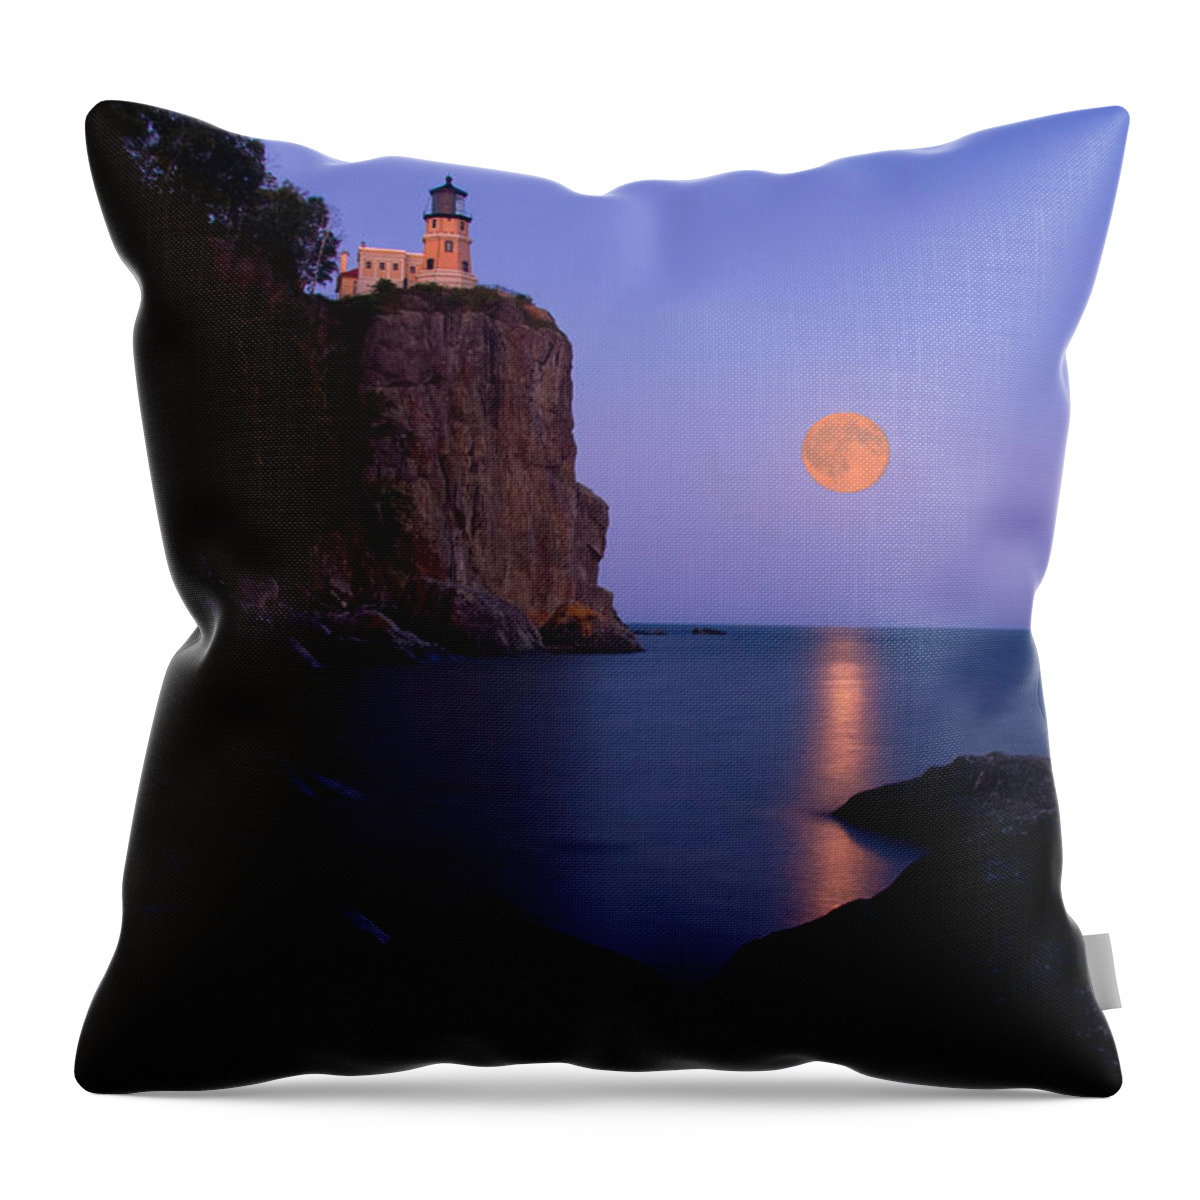 Split Rock Lighthouse Throw Pillow featuring the photograph Split Rock Lighthouse - Full Moon by Wayne Moran